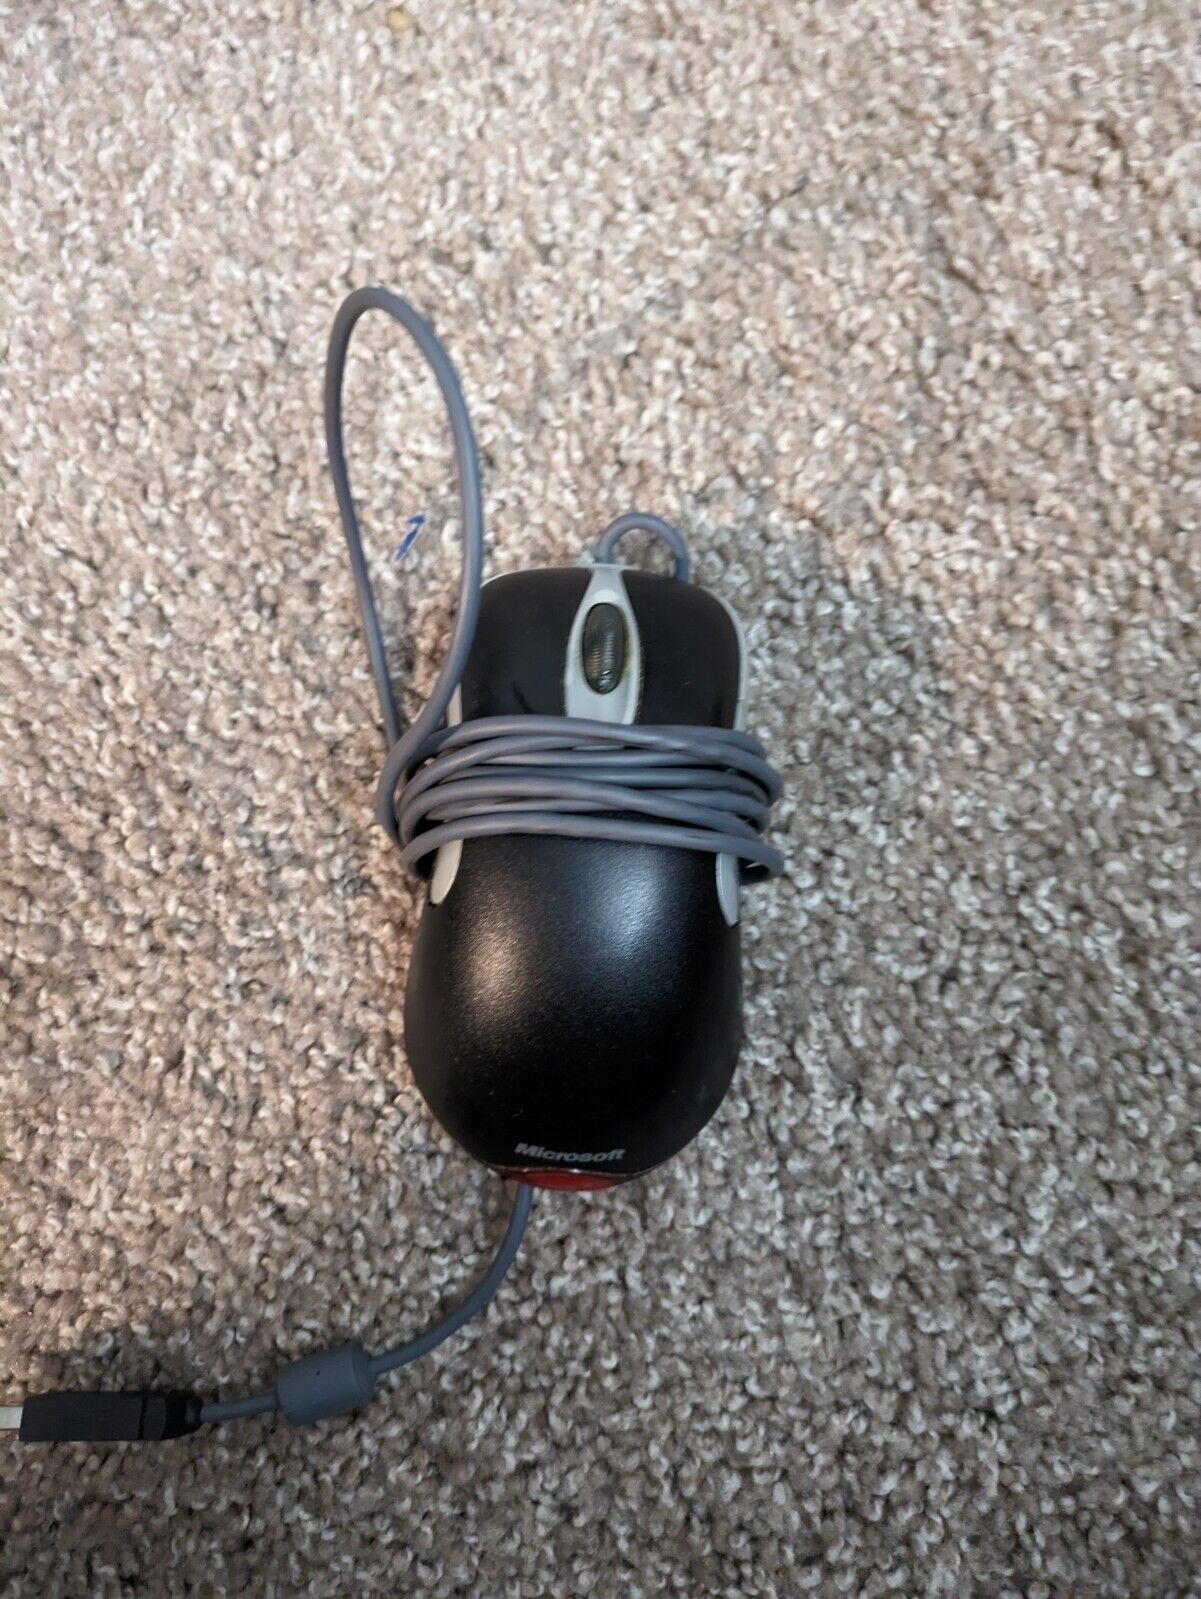 Vintage Microsoft intellimouse Optical USB Wheel Mouse 1.1/1.1a - Tested (Black)